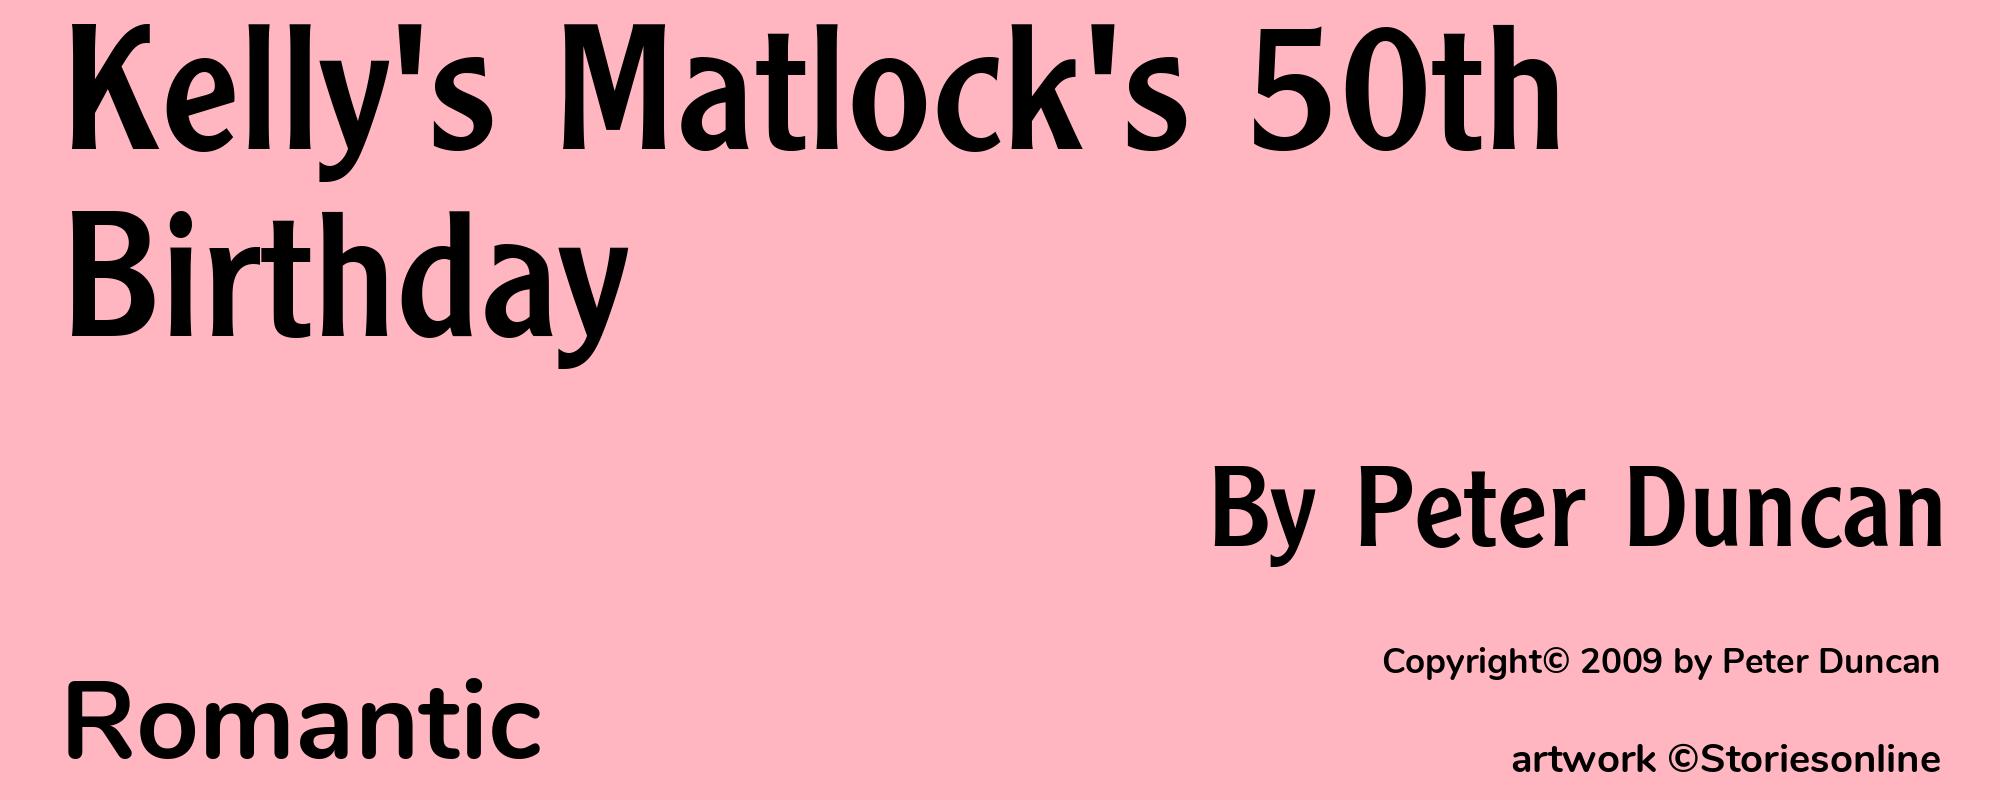 Kelly's Matlock's 50th Birthday - Cover